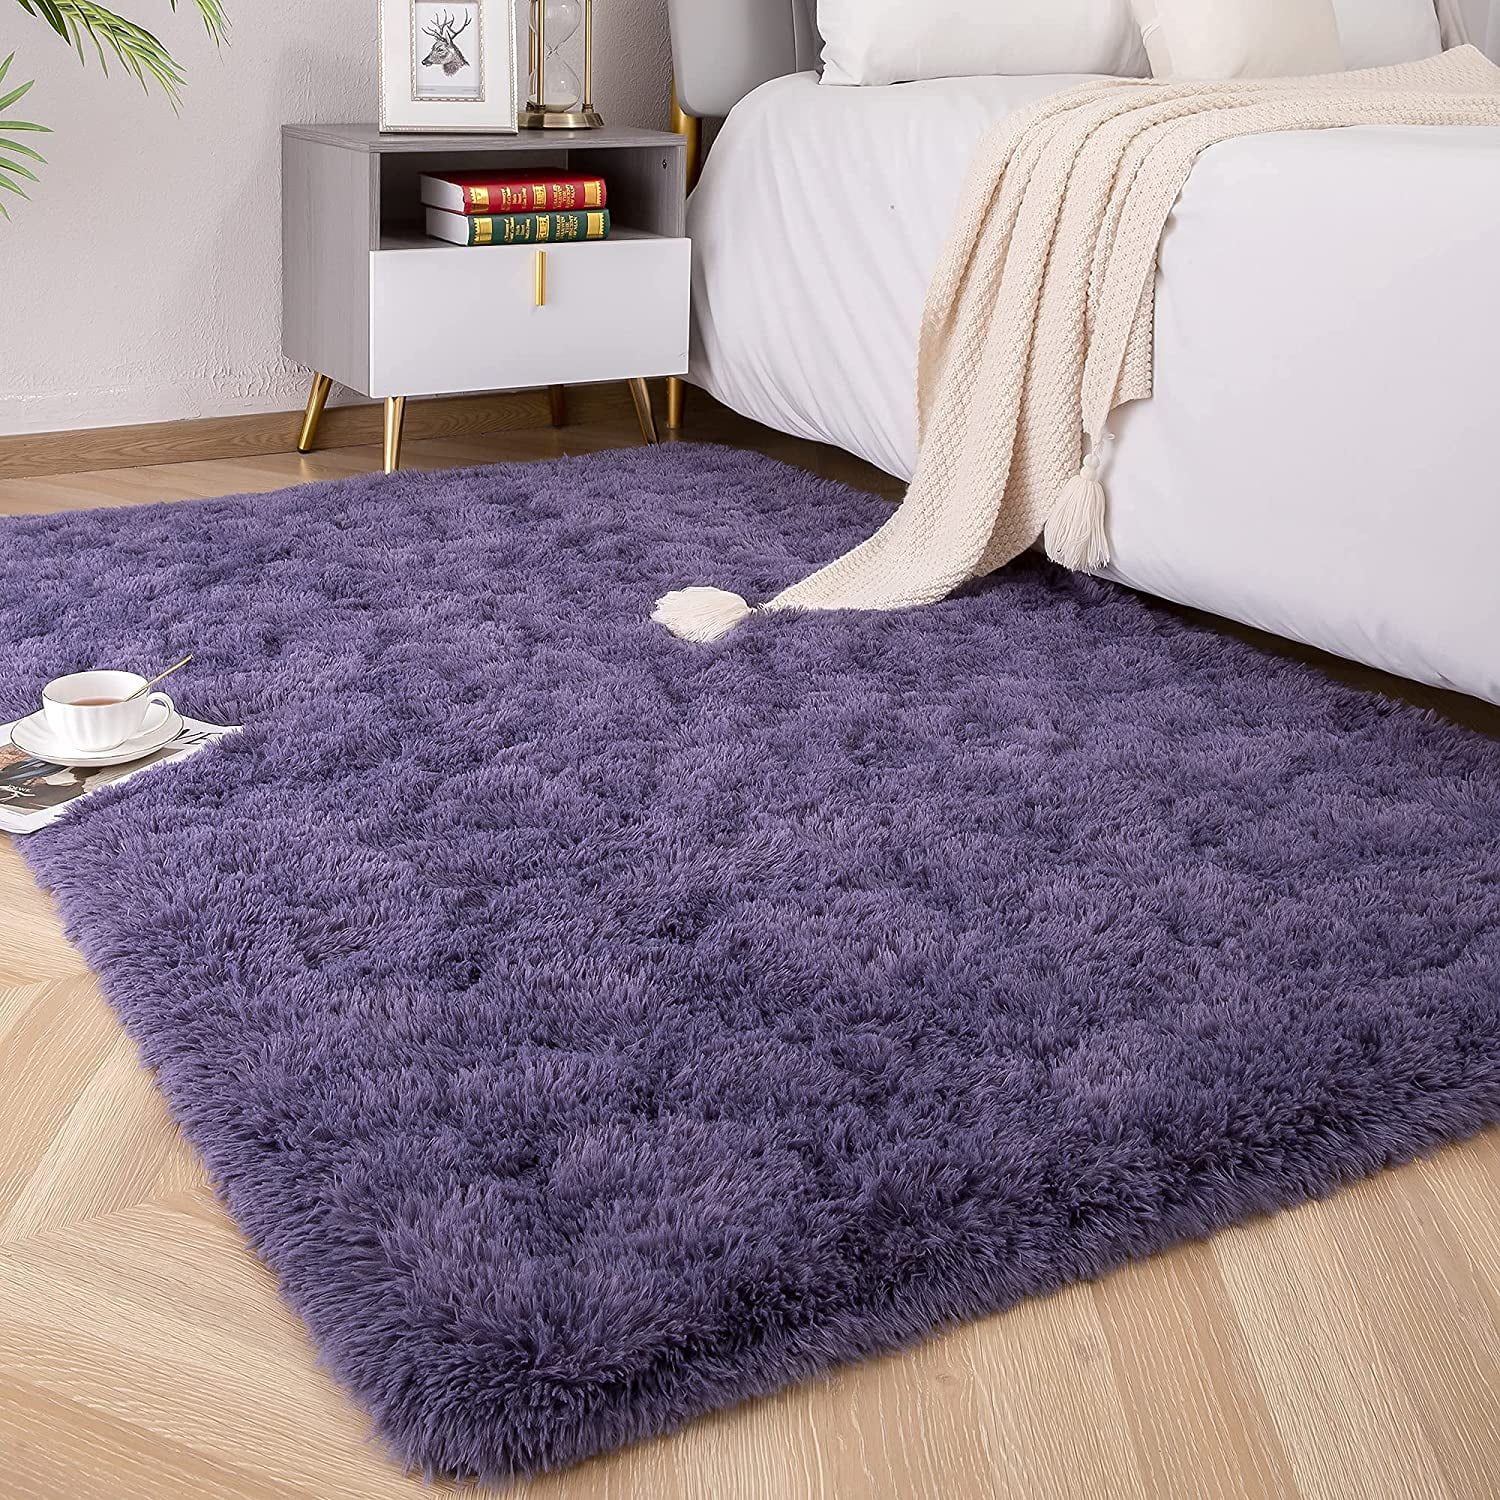 TWINNIS Luxury Fluffy Rugs Ultra Soft Shag Rug Carpet for Bedroom Living  Room,Kids Room, Nursery,4x5.3 Feet,Gray Purple